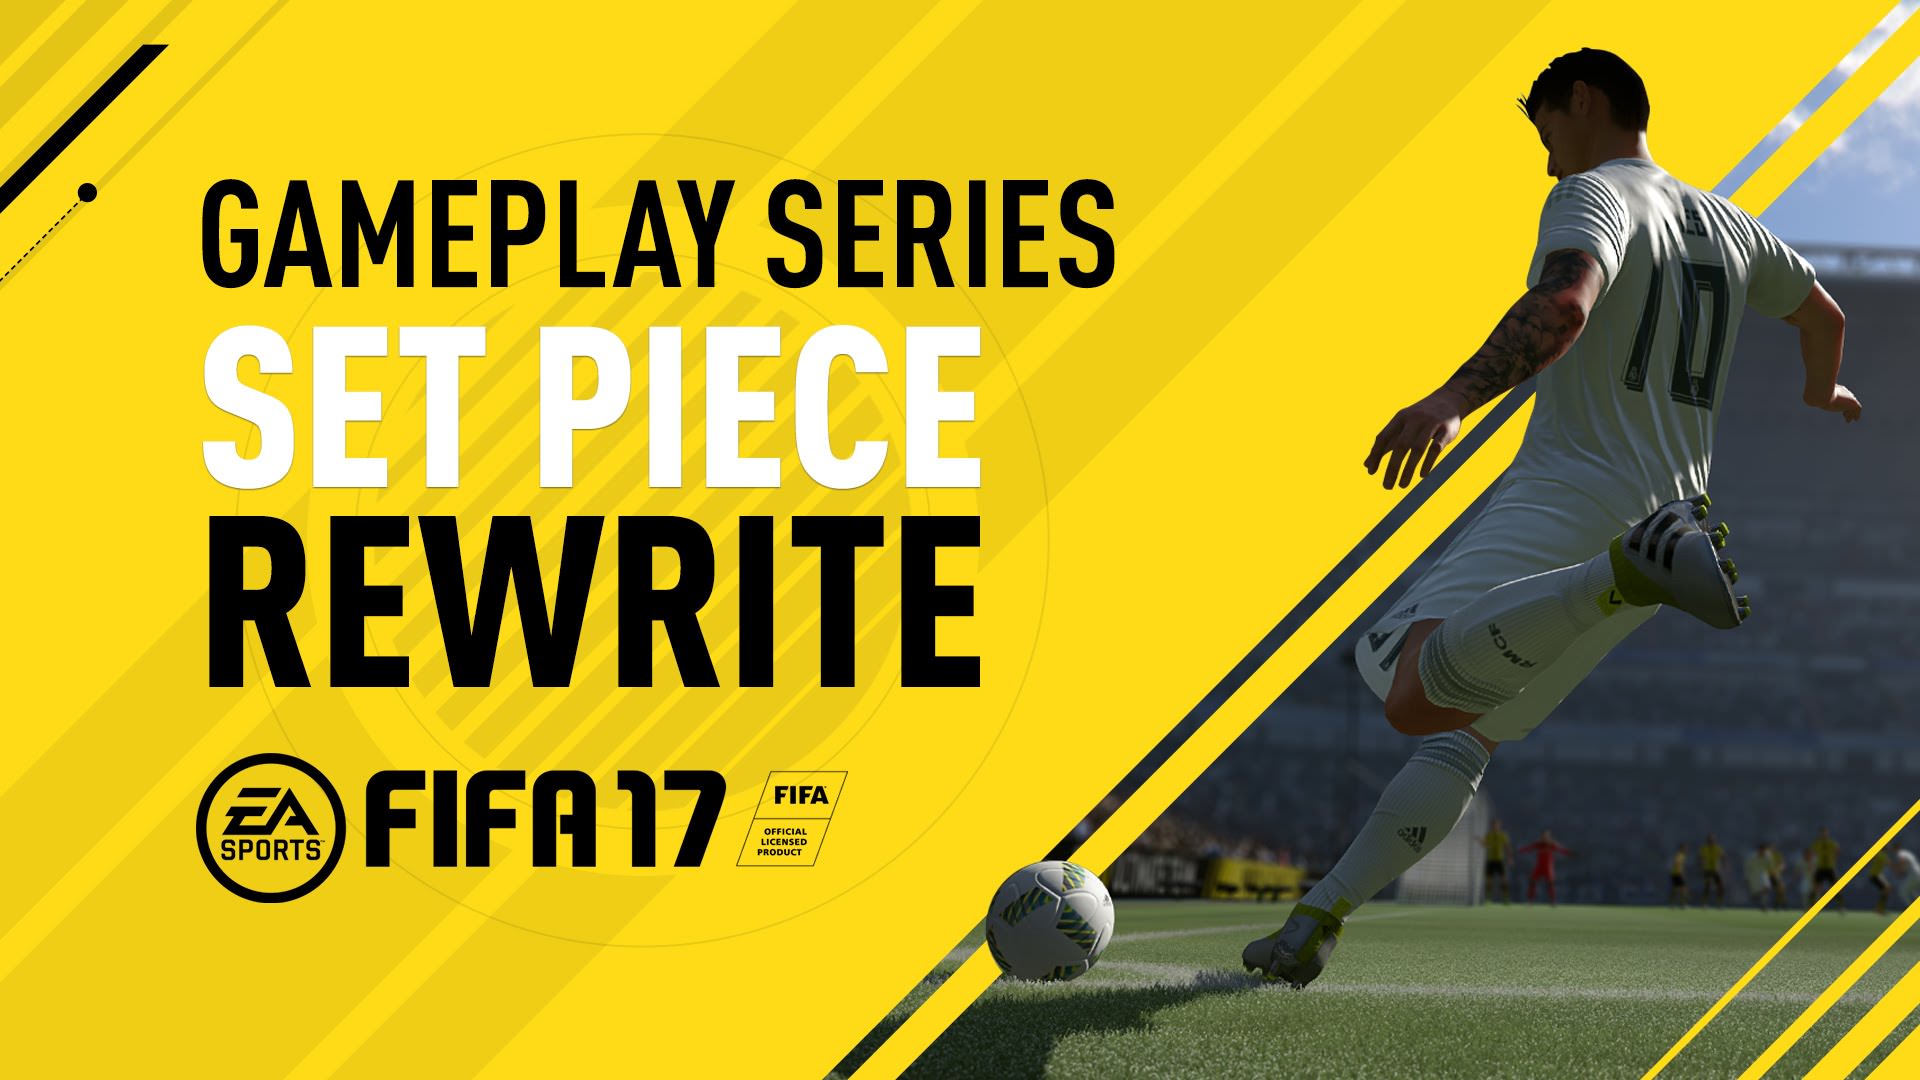 FIFA 17 Gameplay Features – Set Piece Rewrite